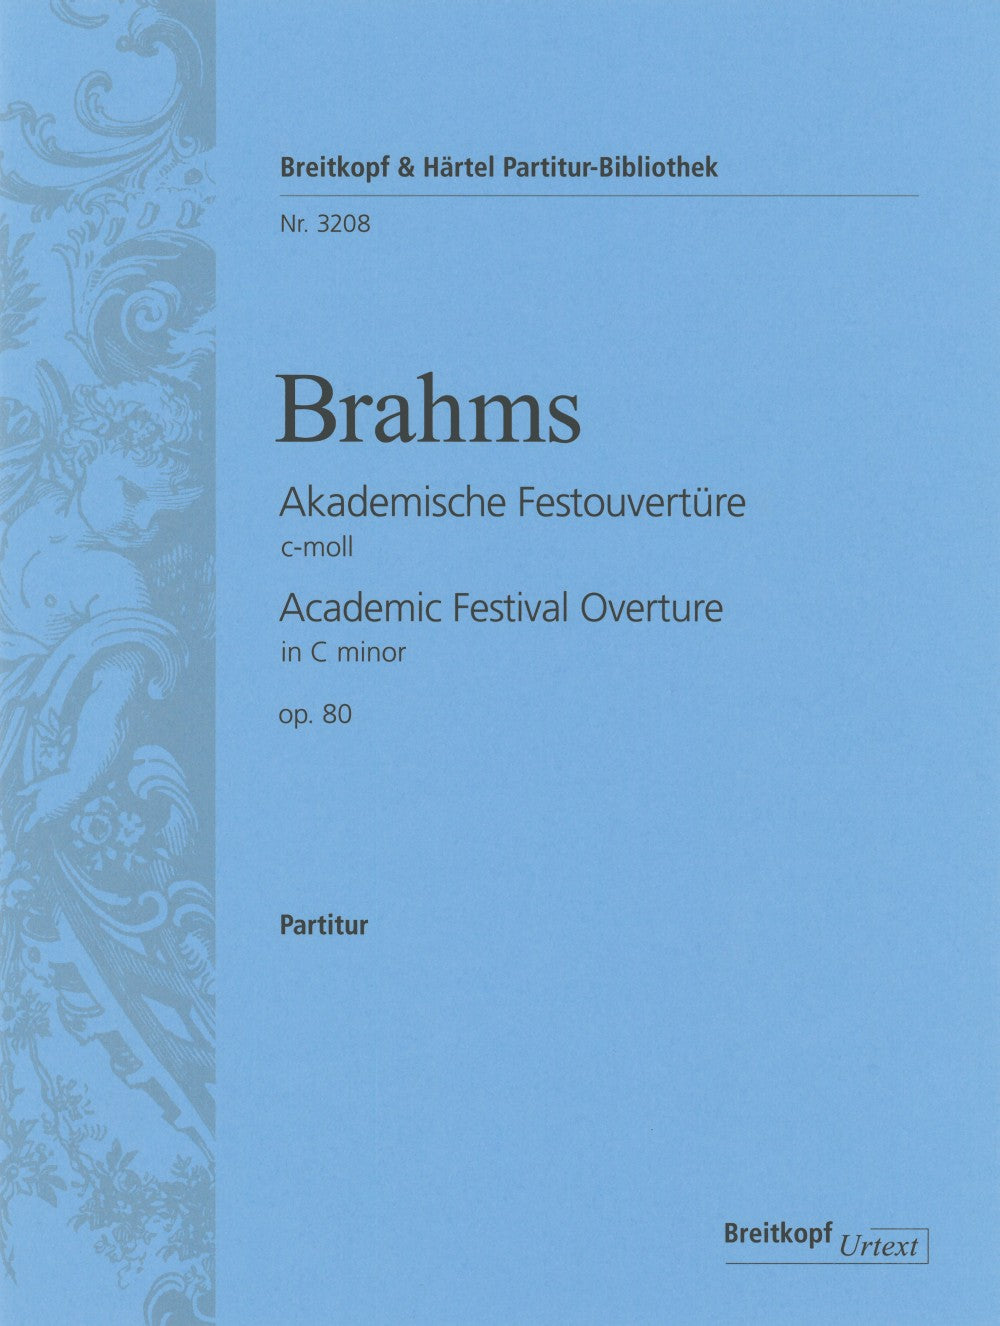 Brahms Academic Festival Overture in C minor Op. 80 - Full Score